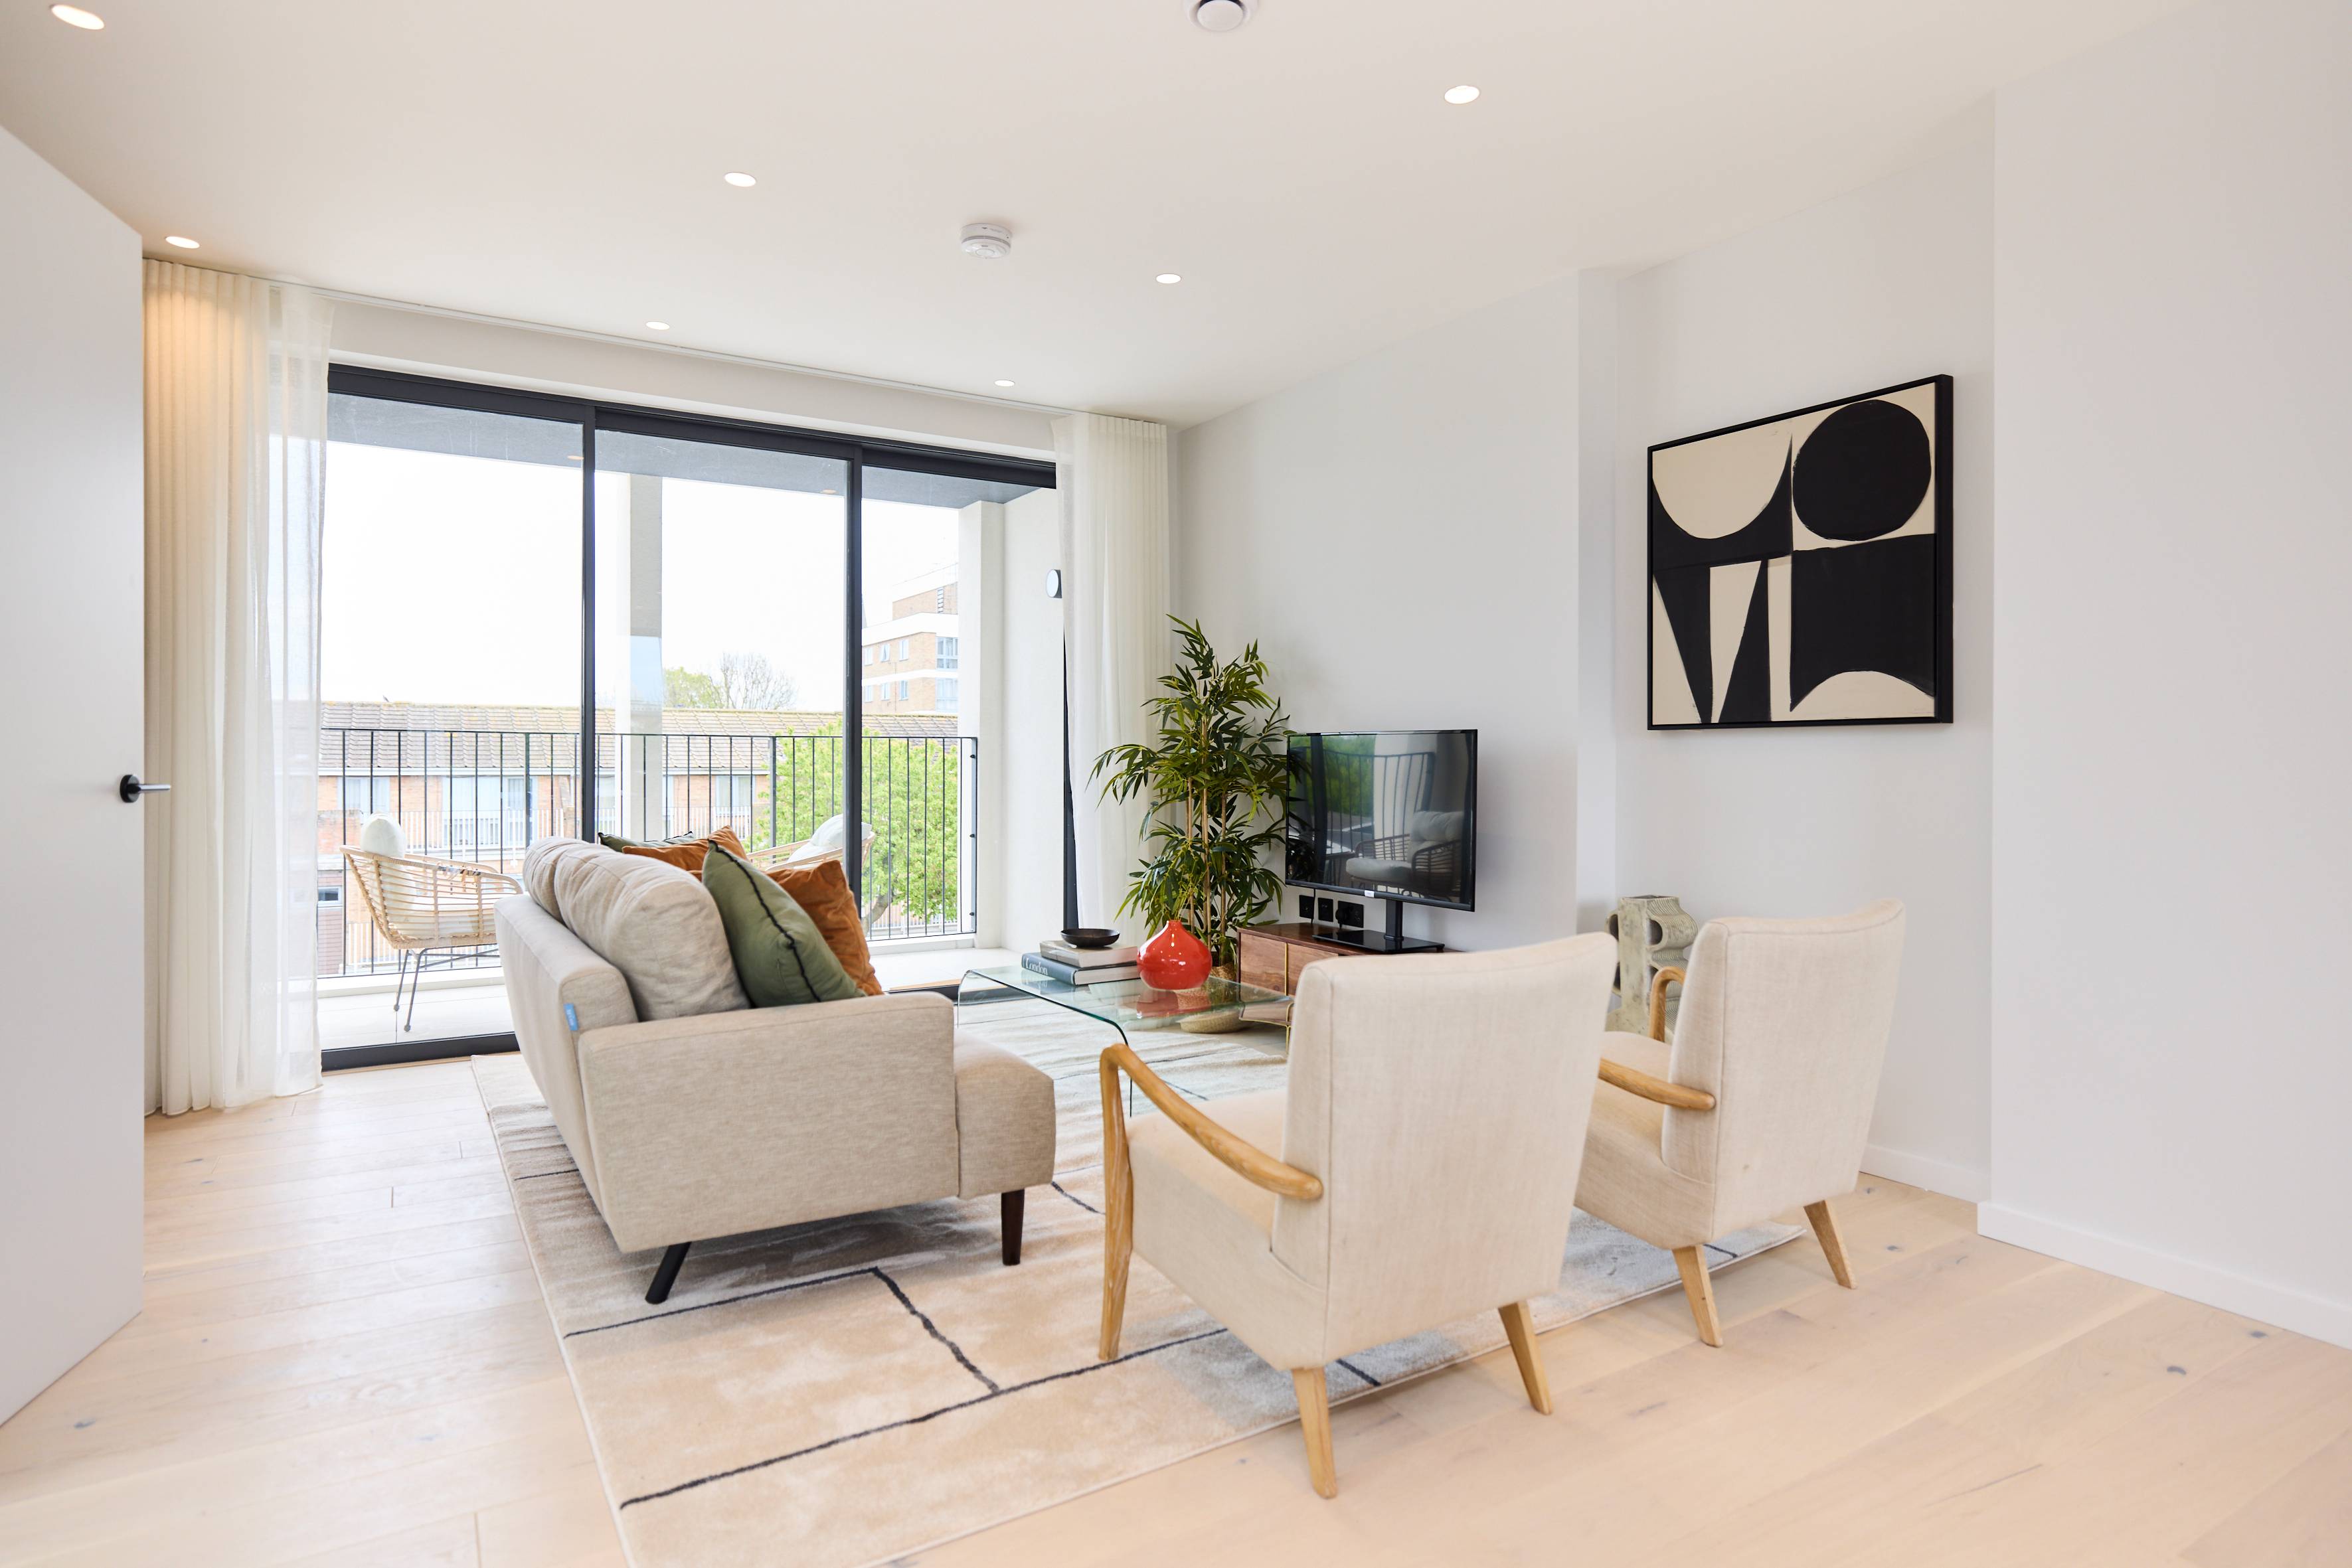 Brand-New Contemporary Three-Bedroom Duplex Apartment in fantastic North West London neighbourhood